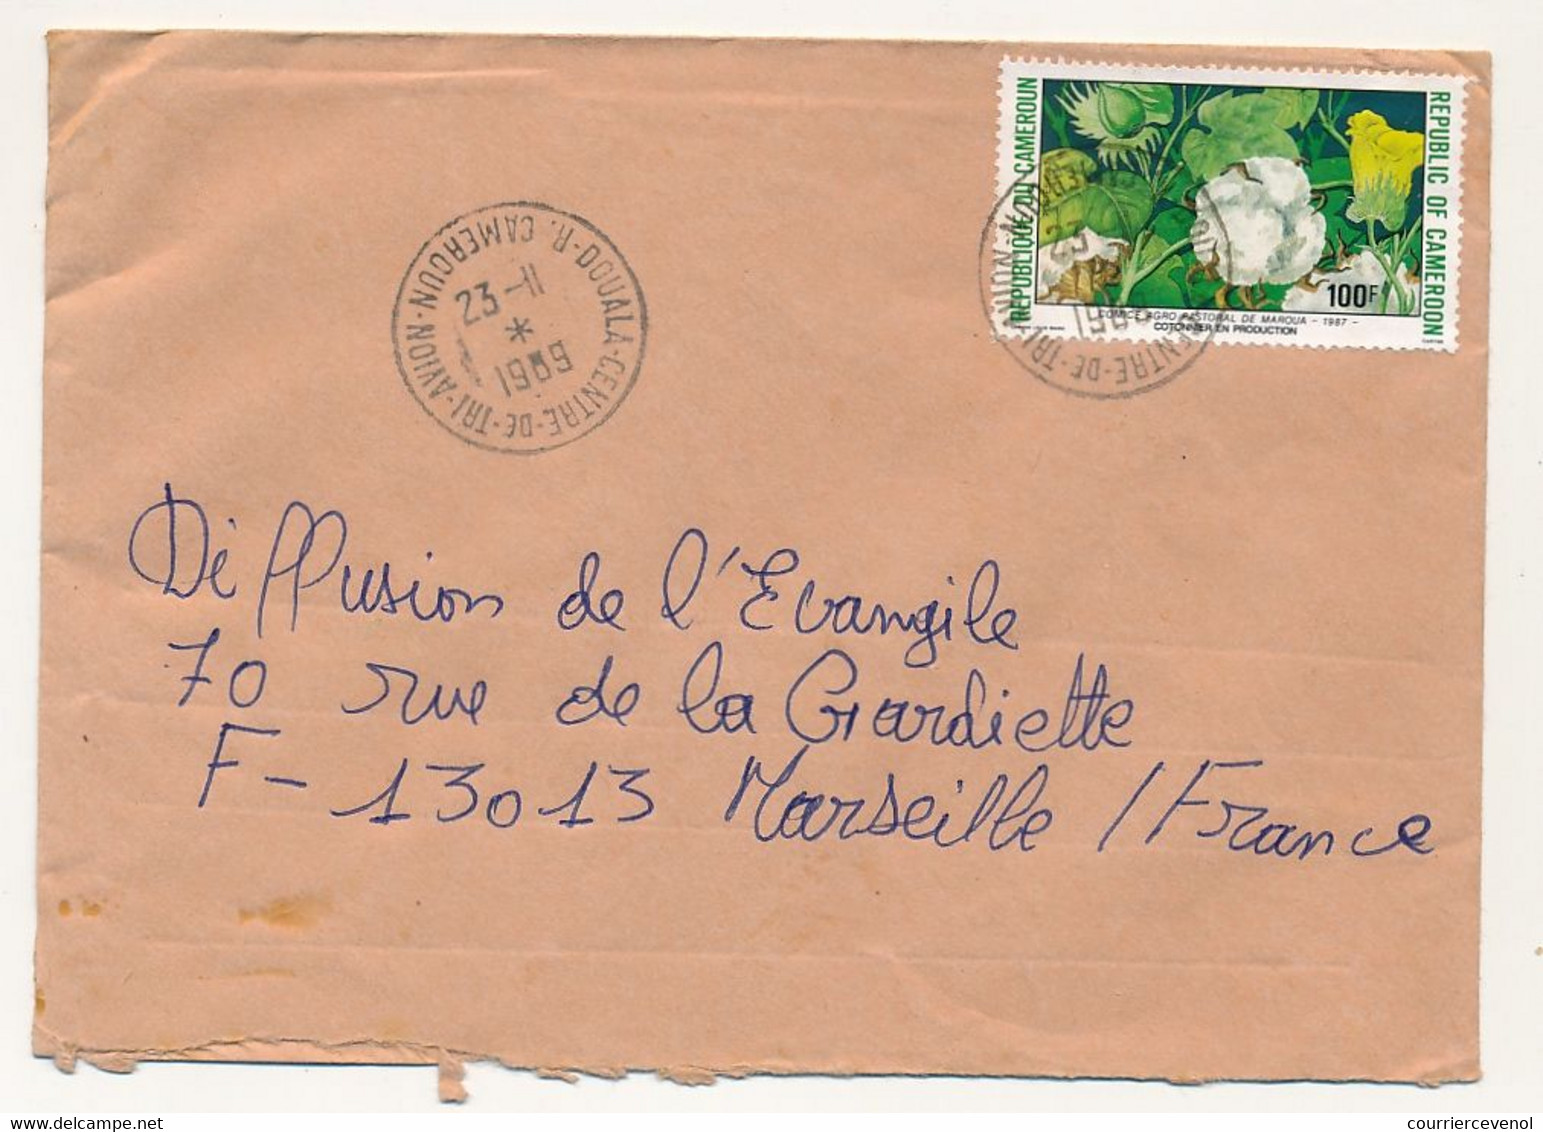 CAMEROUN => Enveloppe Douala Centre De Tri Avion Pour France, Affr. 100F Cotonnier - 23/11/1969 - Cameroun (1960-...)